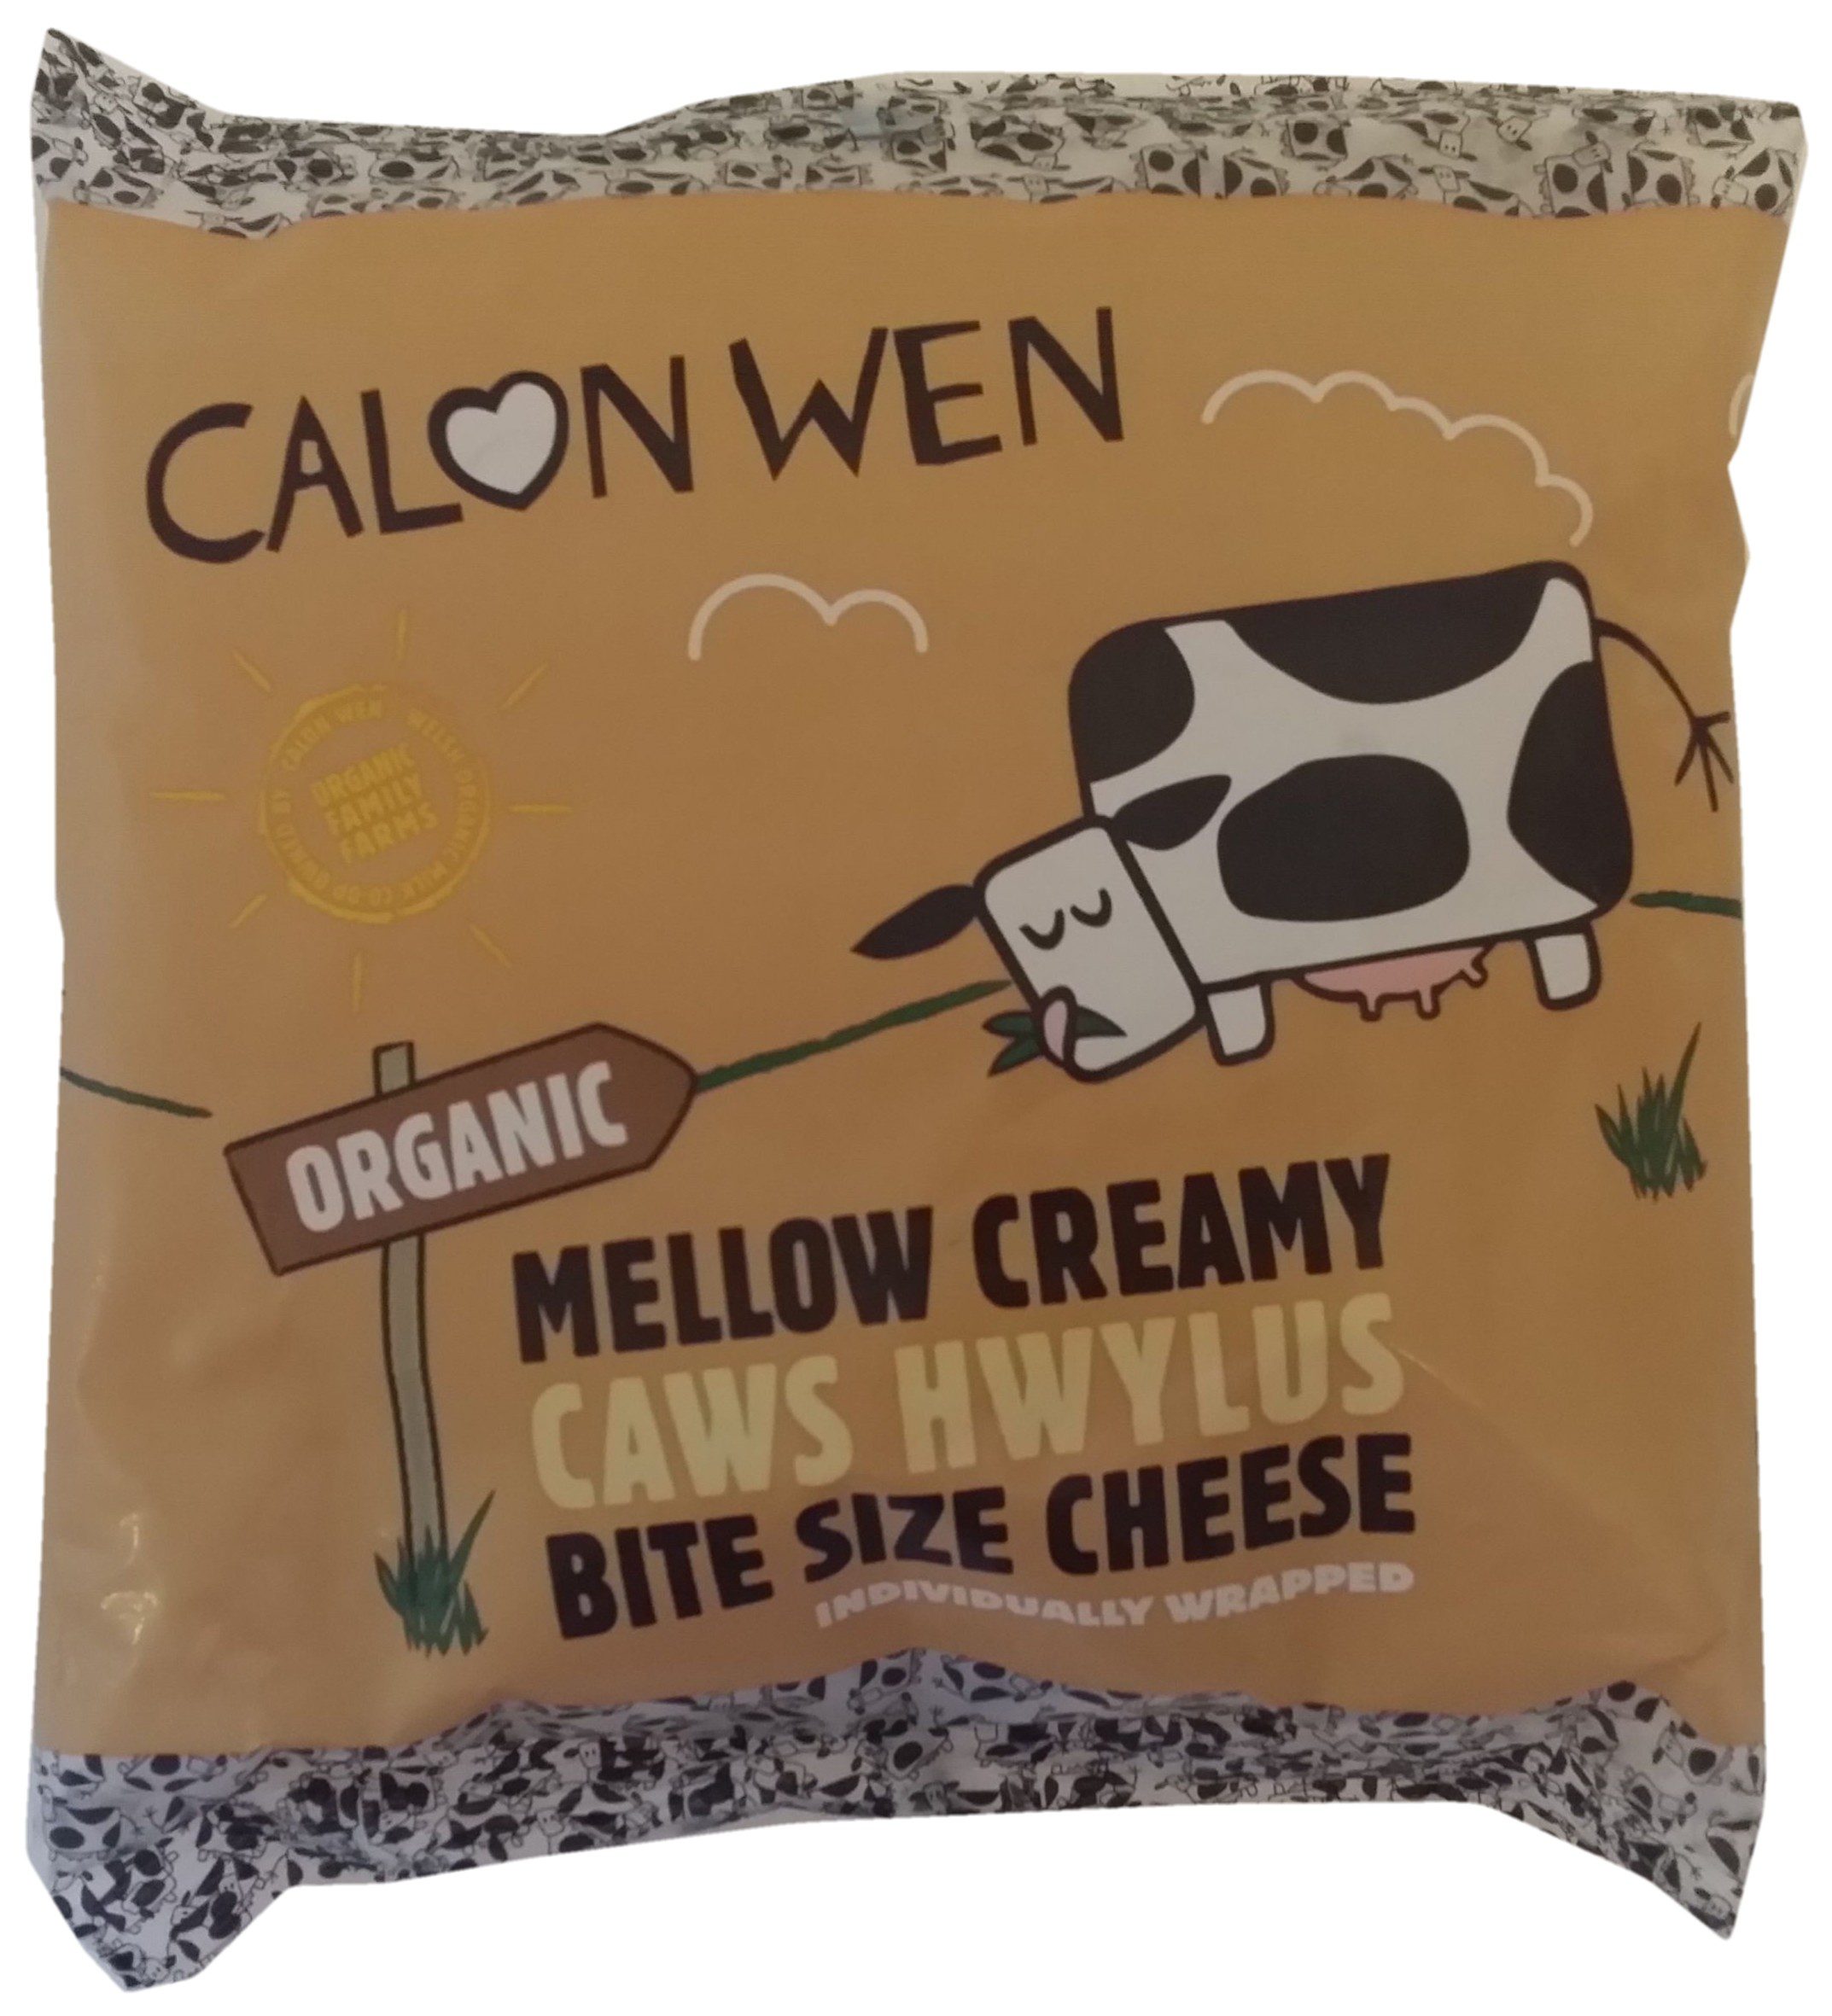 Organic Mellow Creamy Caws Hwylus Bite Size Cheese